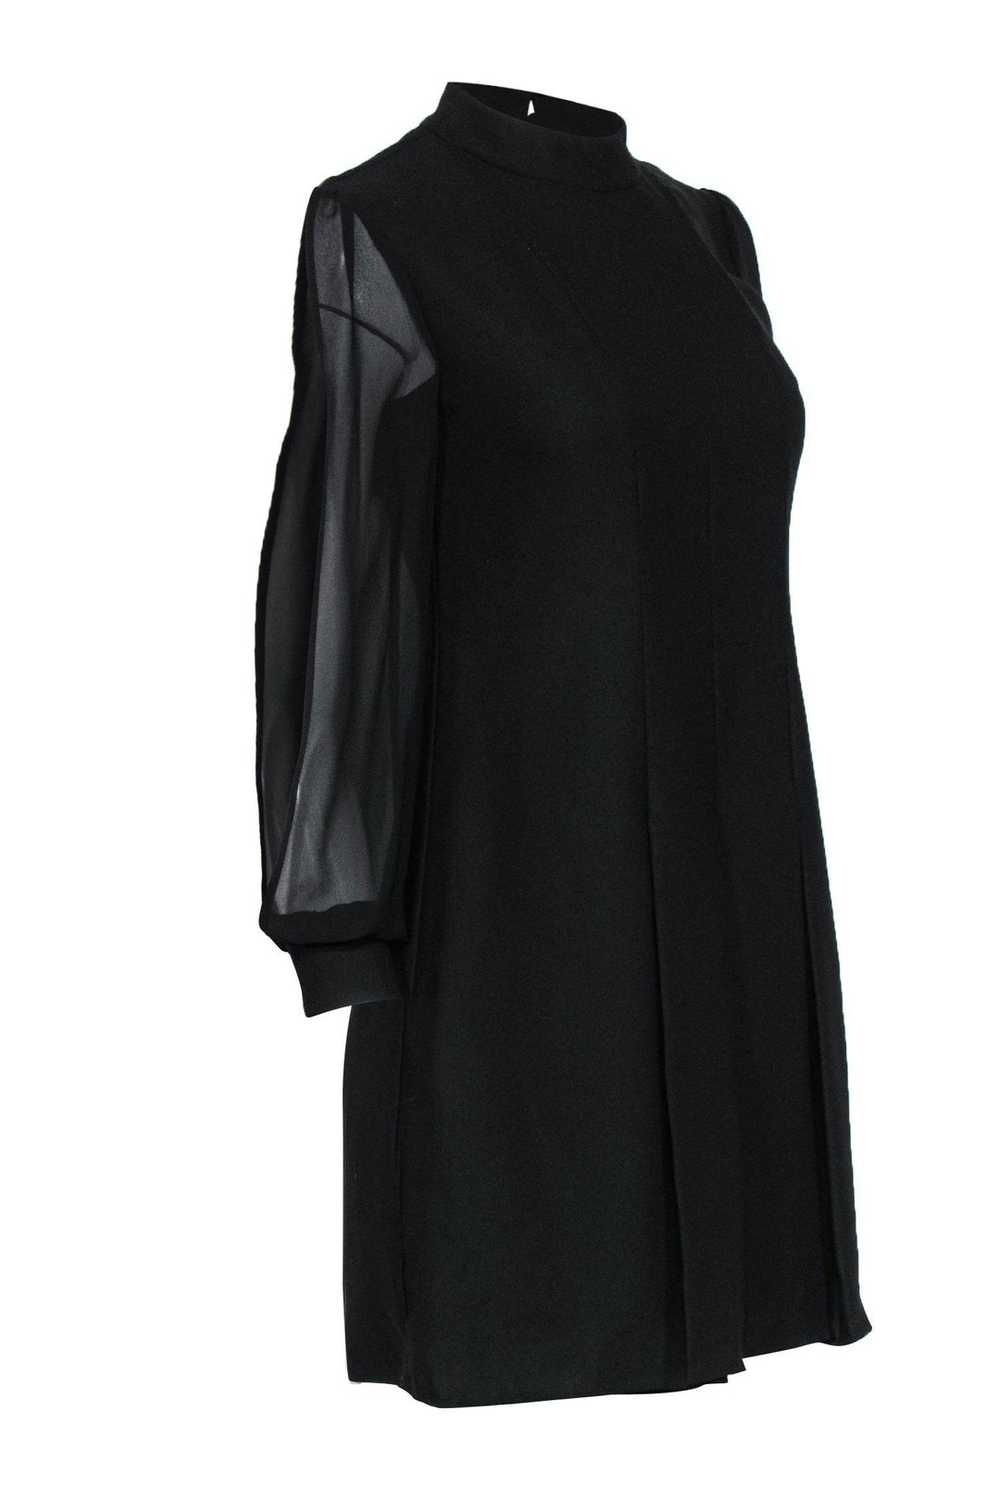 Cynthia Steffe - Black Mesh Sleeved Mini Dress w/… - image 2